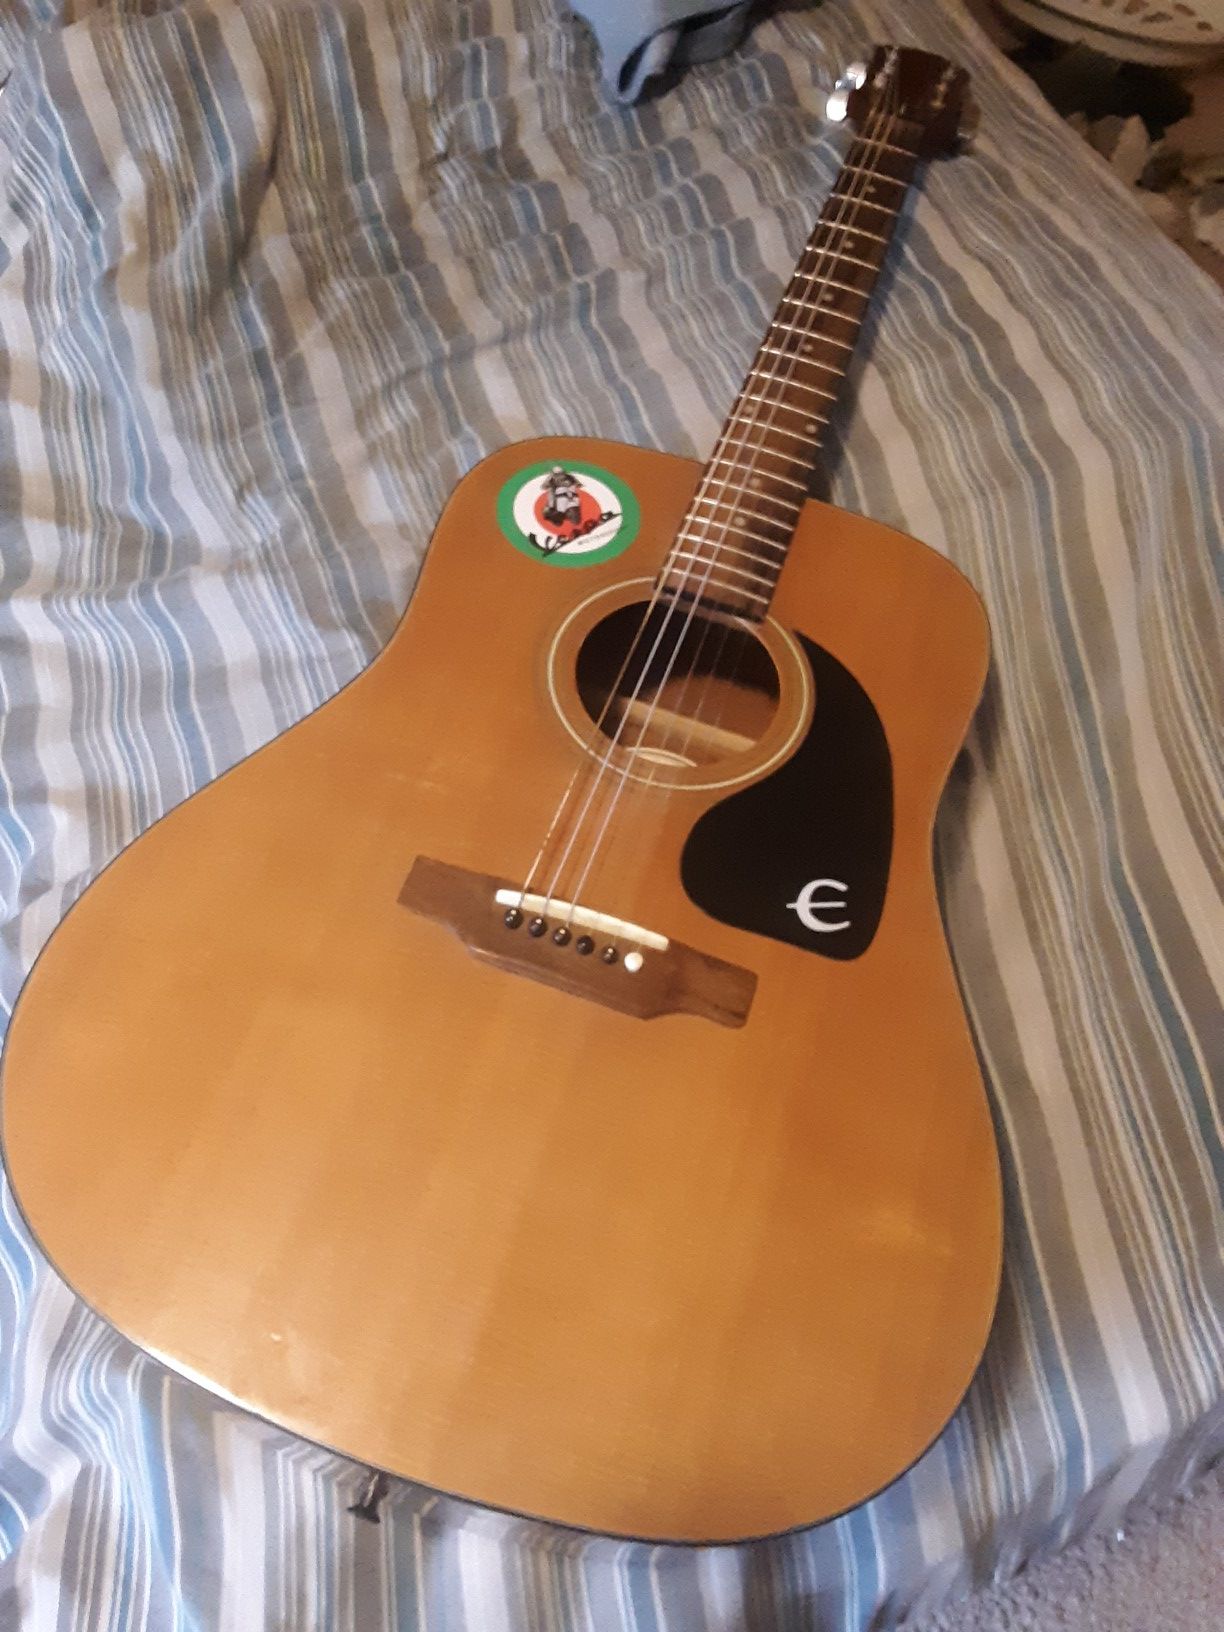 Epiphone full size acoustic guitar